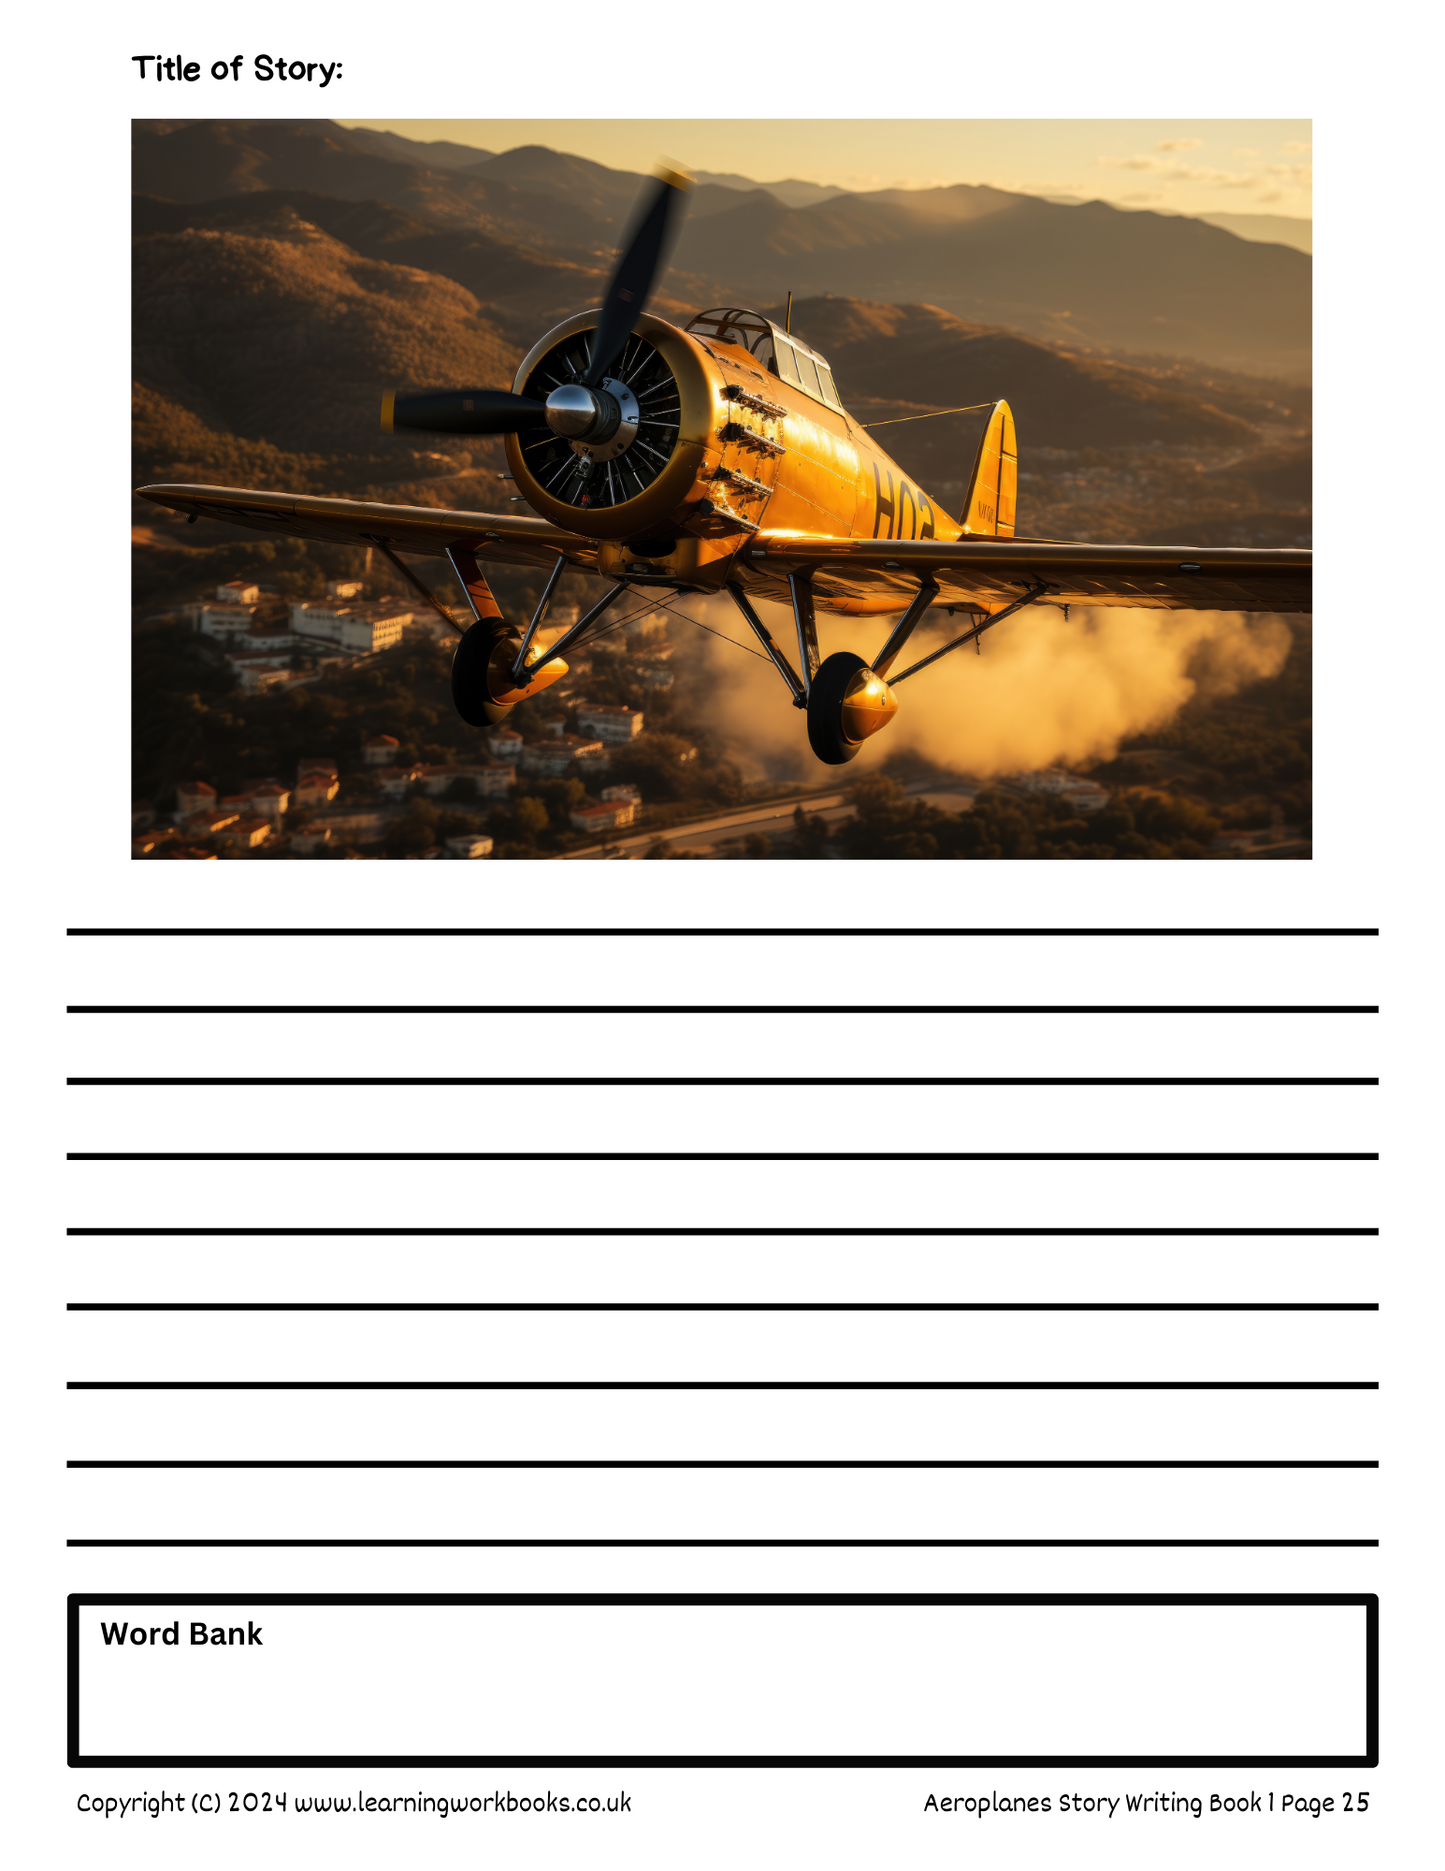 Aeroplanes Story Writing Book 1